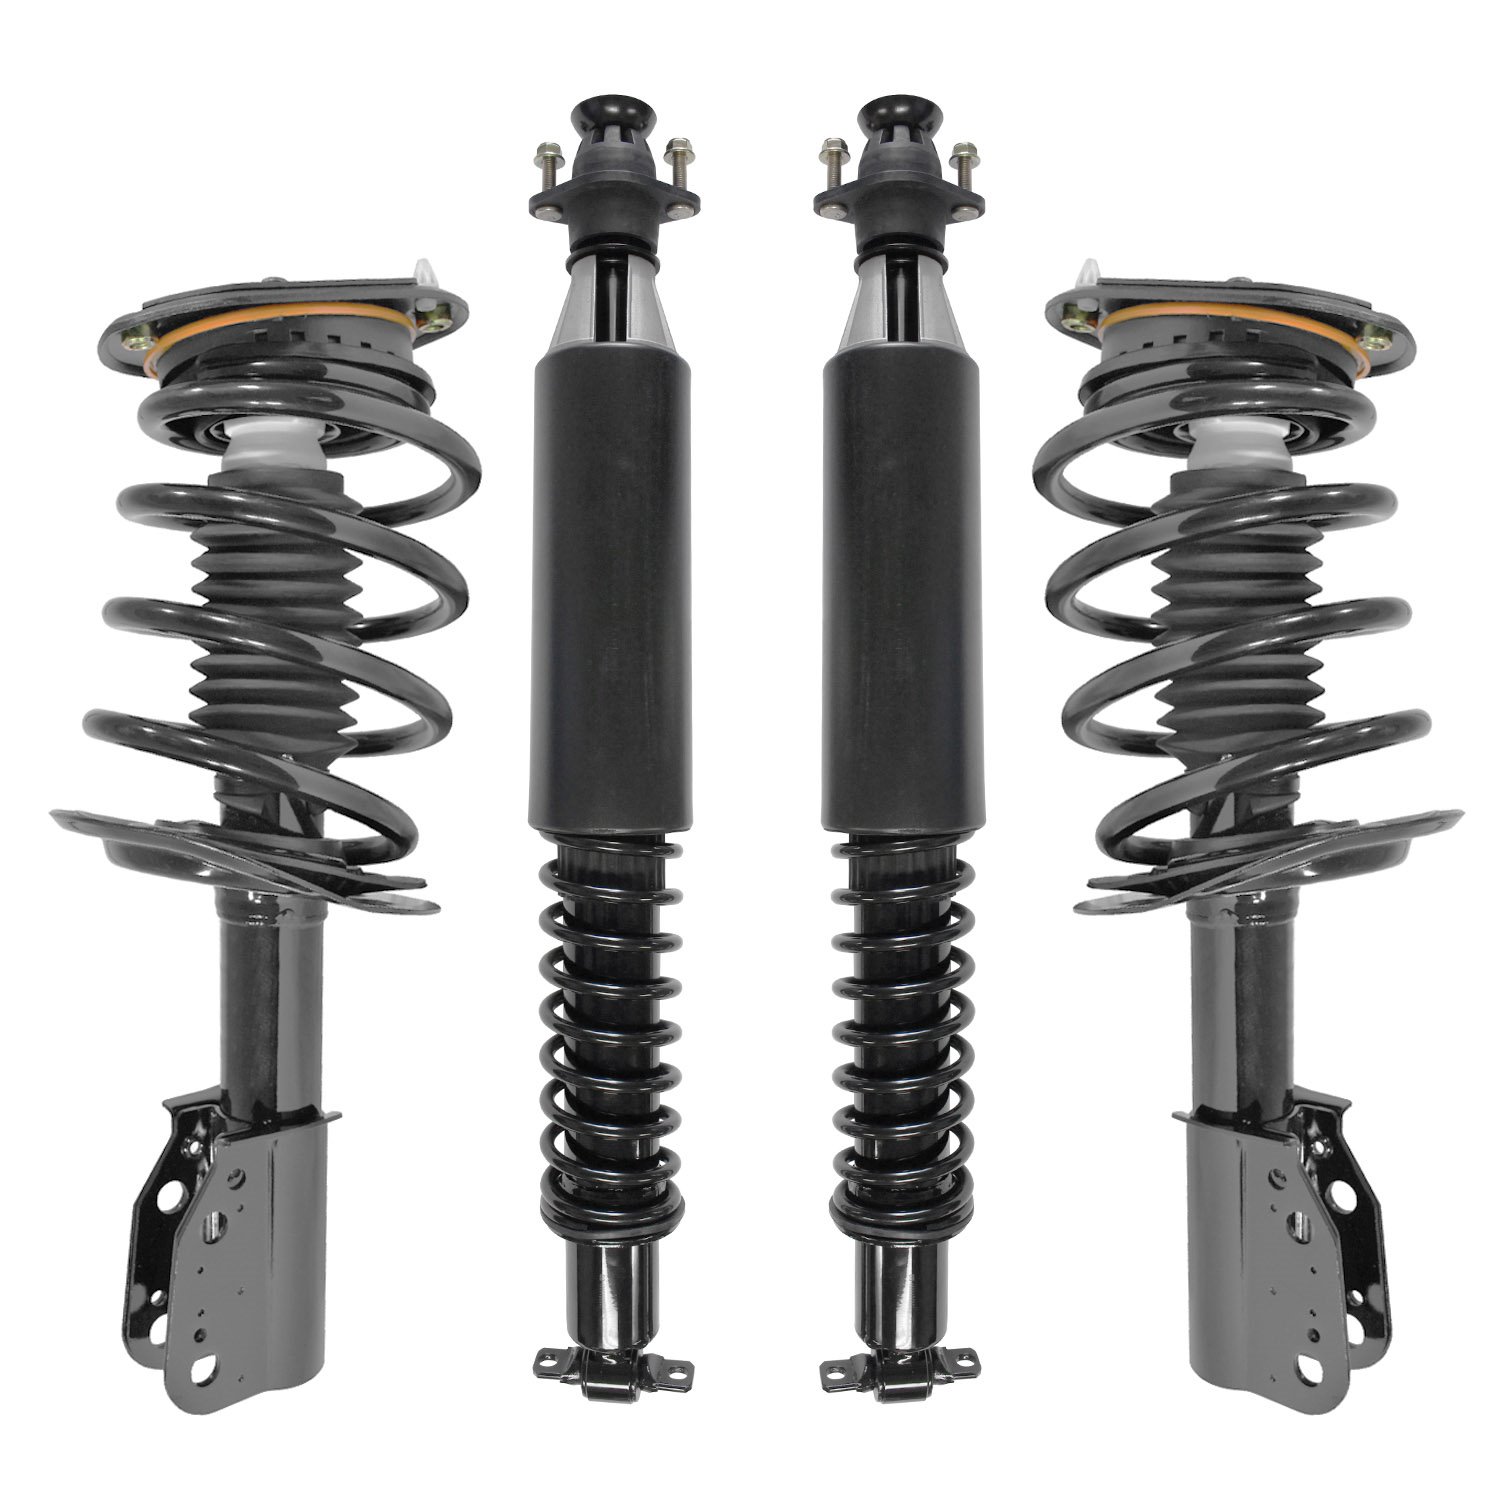 4-11700-65200c-001 Front & Rear Suspension Strut & Coil Spring Assembly Shock Absorber Set Fits Select GM